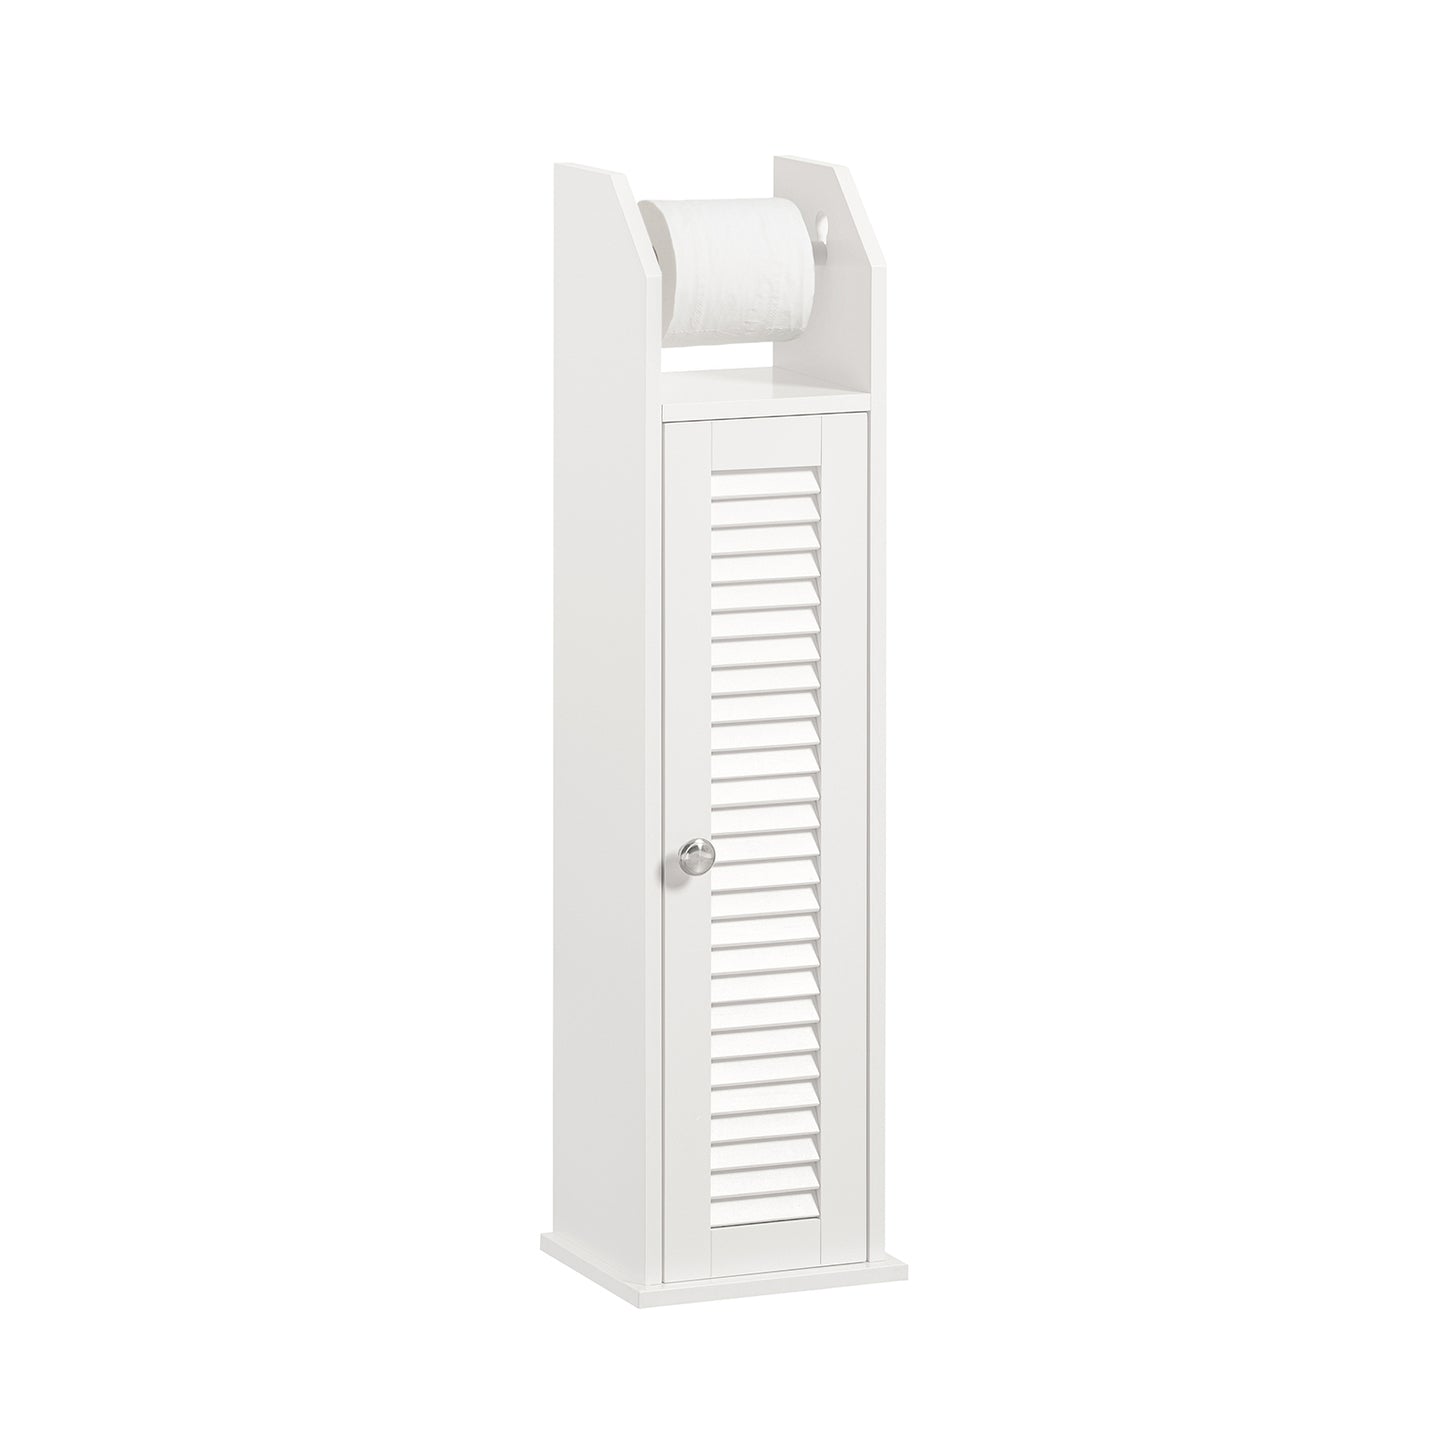 SoBuy White Free Standing Wooden Bathroom Storage Cabinet,Toilet Brush Holder